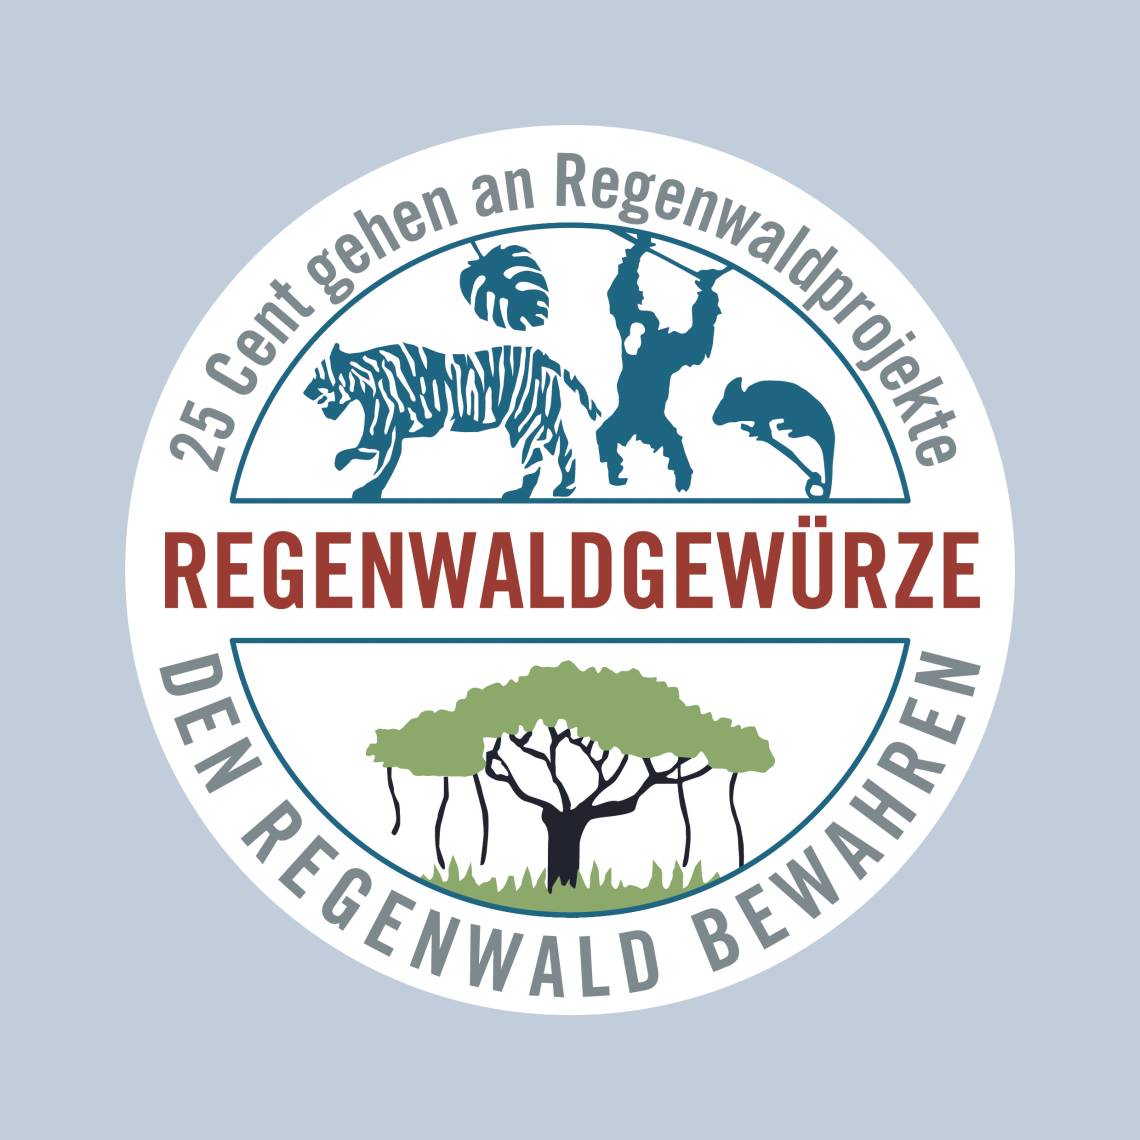 GewürzGuru - Label Regenwaldgewürze